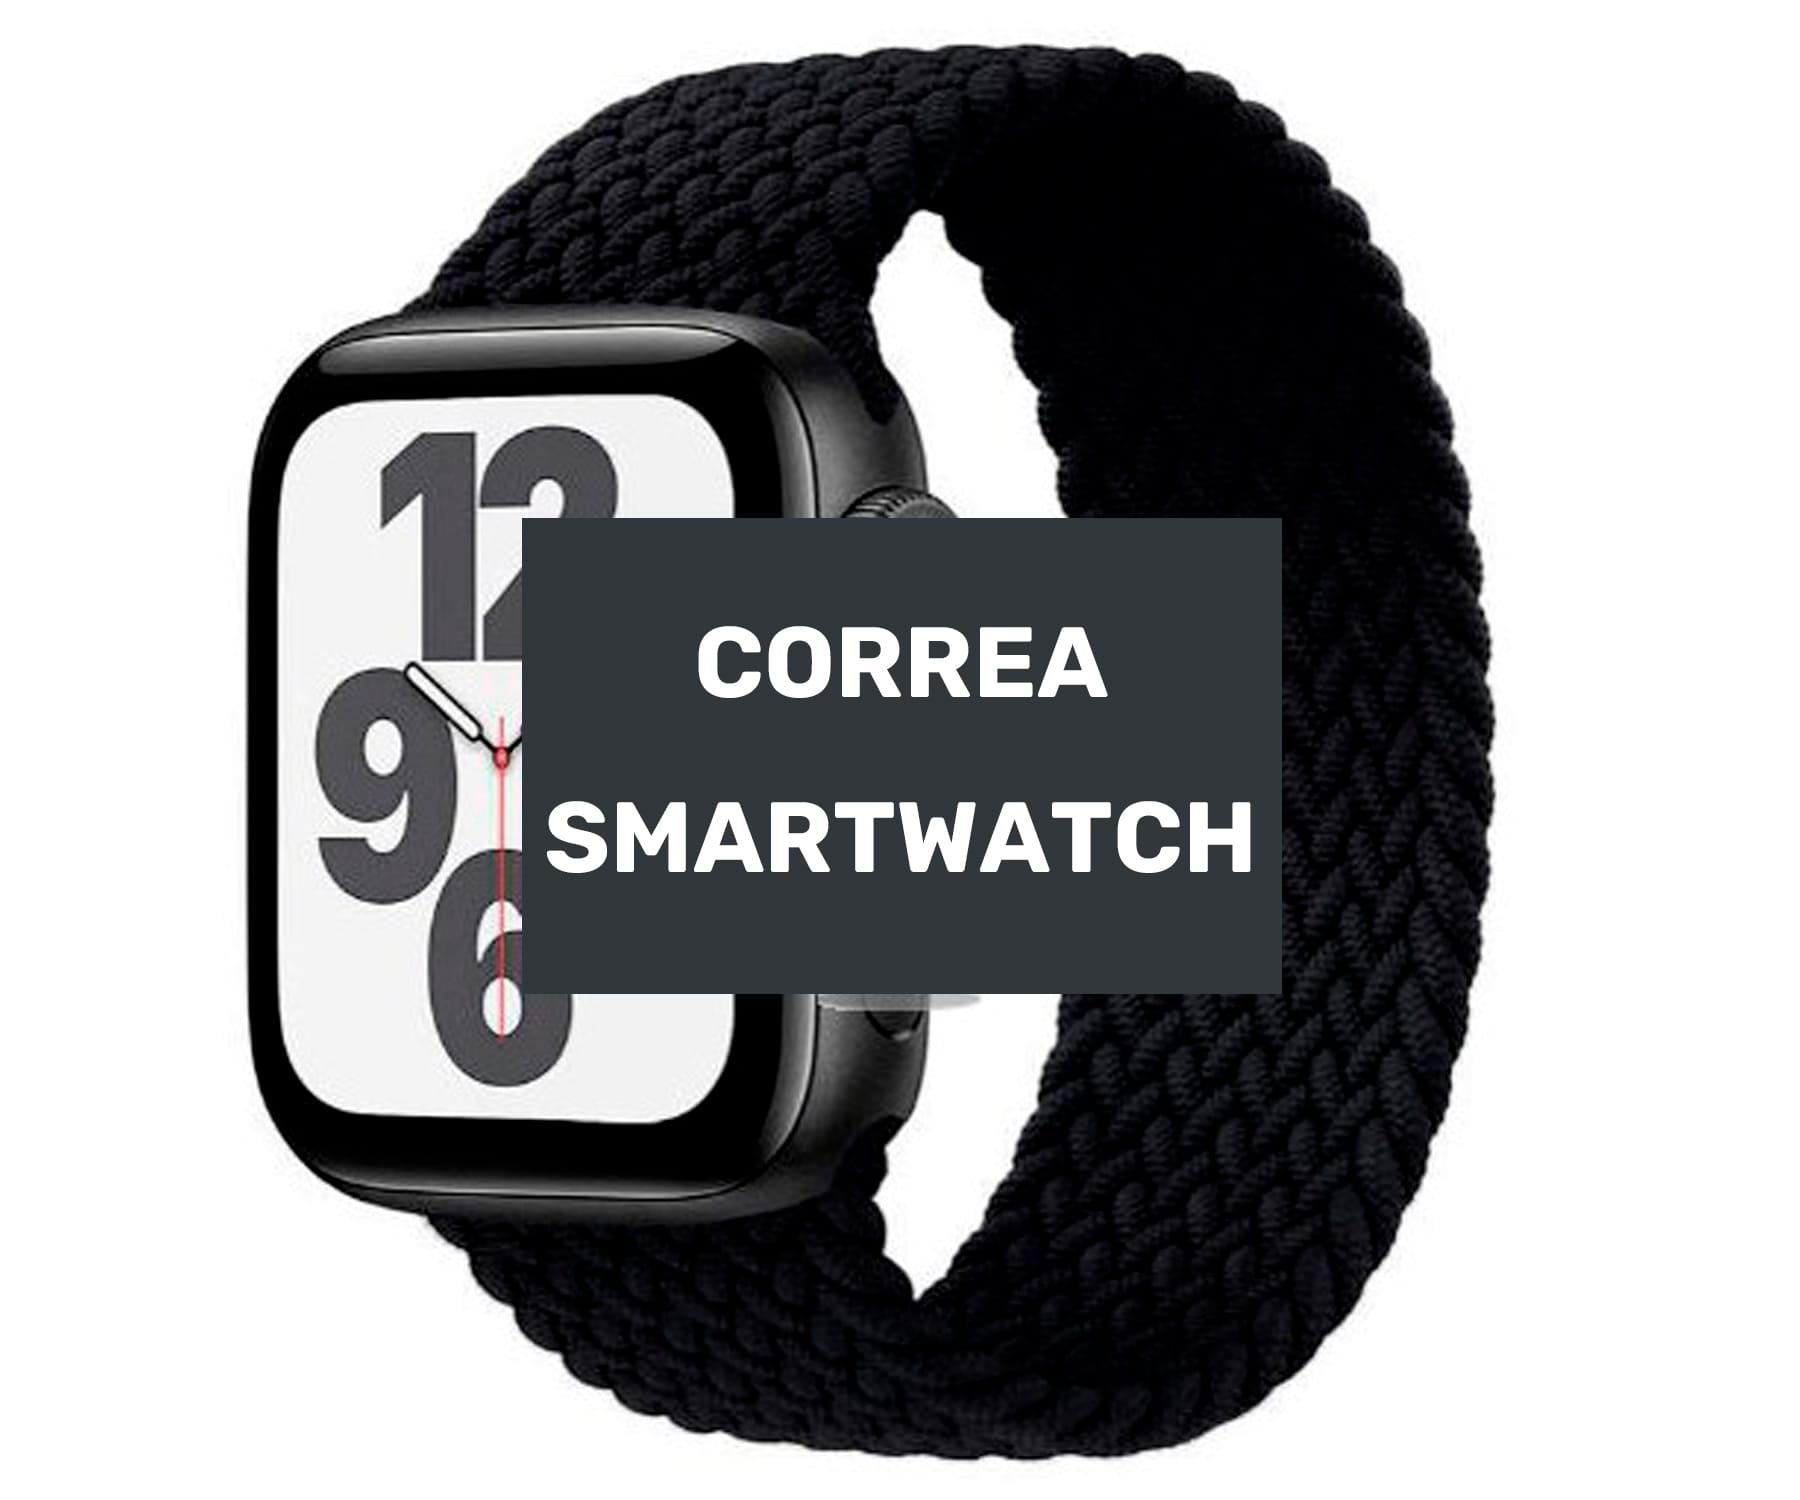 JC Correa de smartwatch de tela negra / Apple Watch 44mm